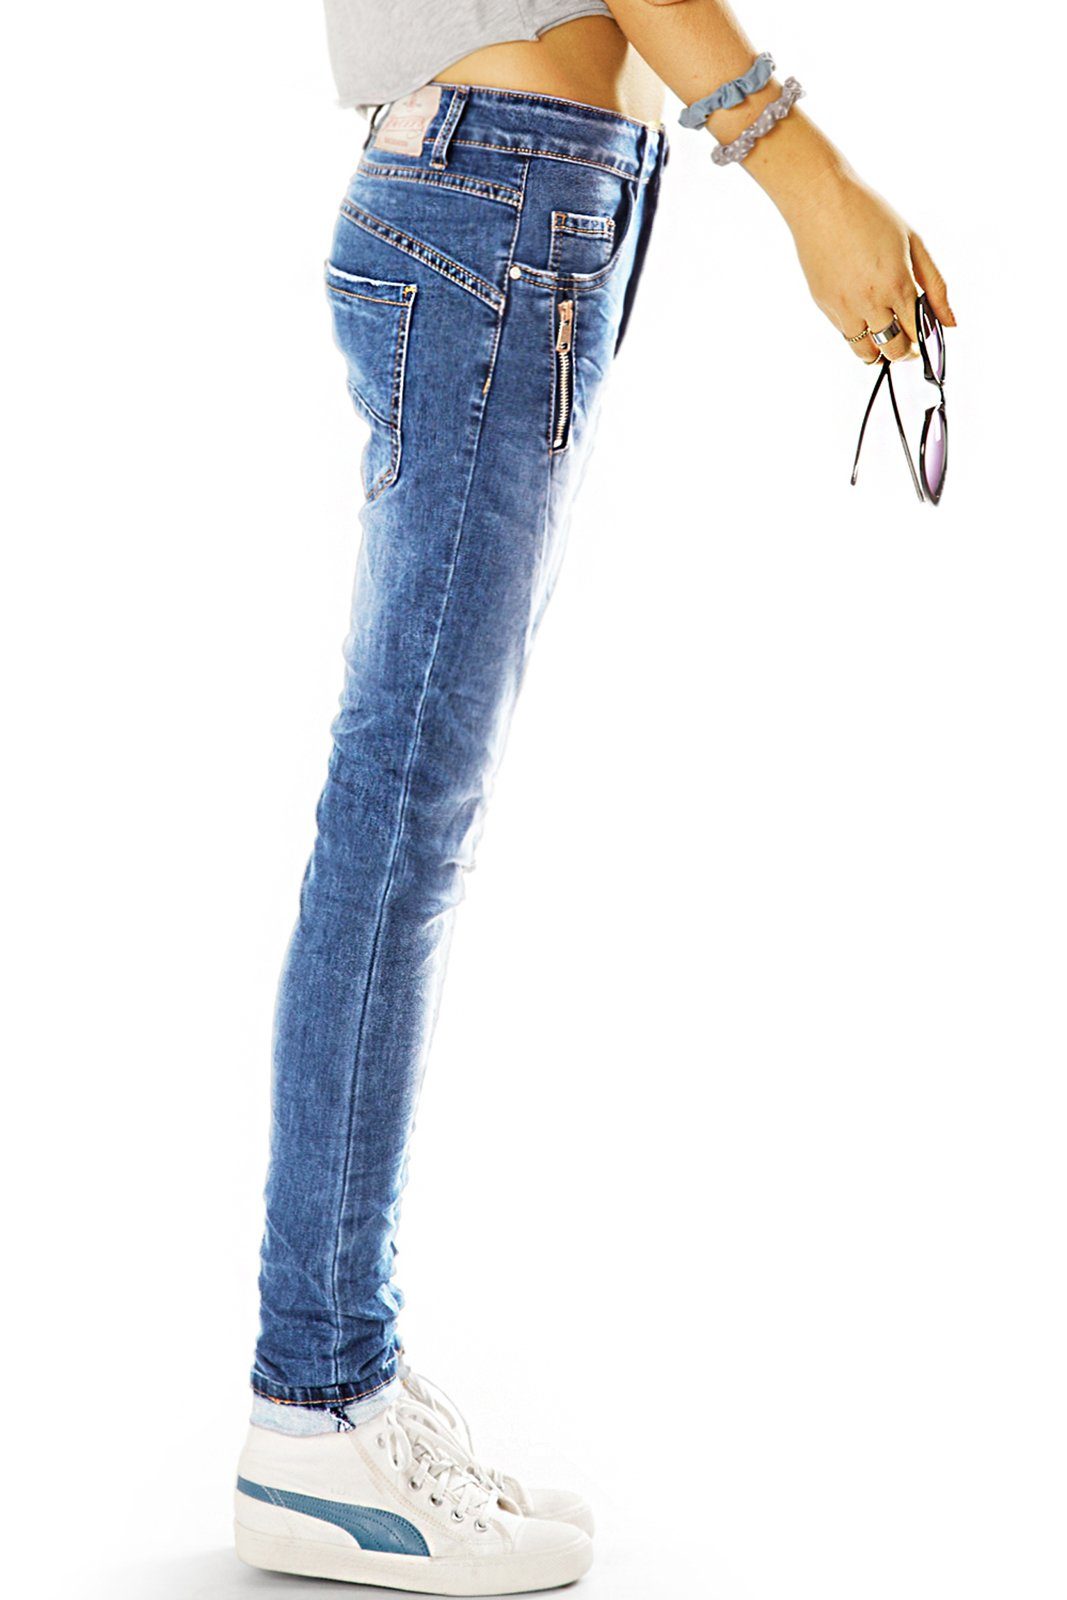 Hose Slim Low Fit Hüftjeans Stretch-Anteil, Jeans Rise be mit bequeme - Damen- j6f-1 styled Low-rise-Jeans 5-Pocket-Style